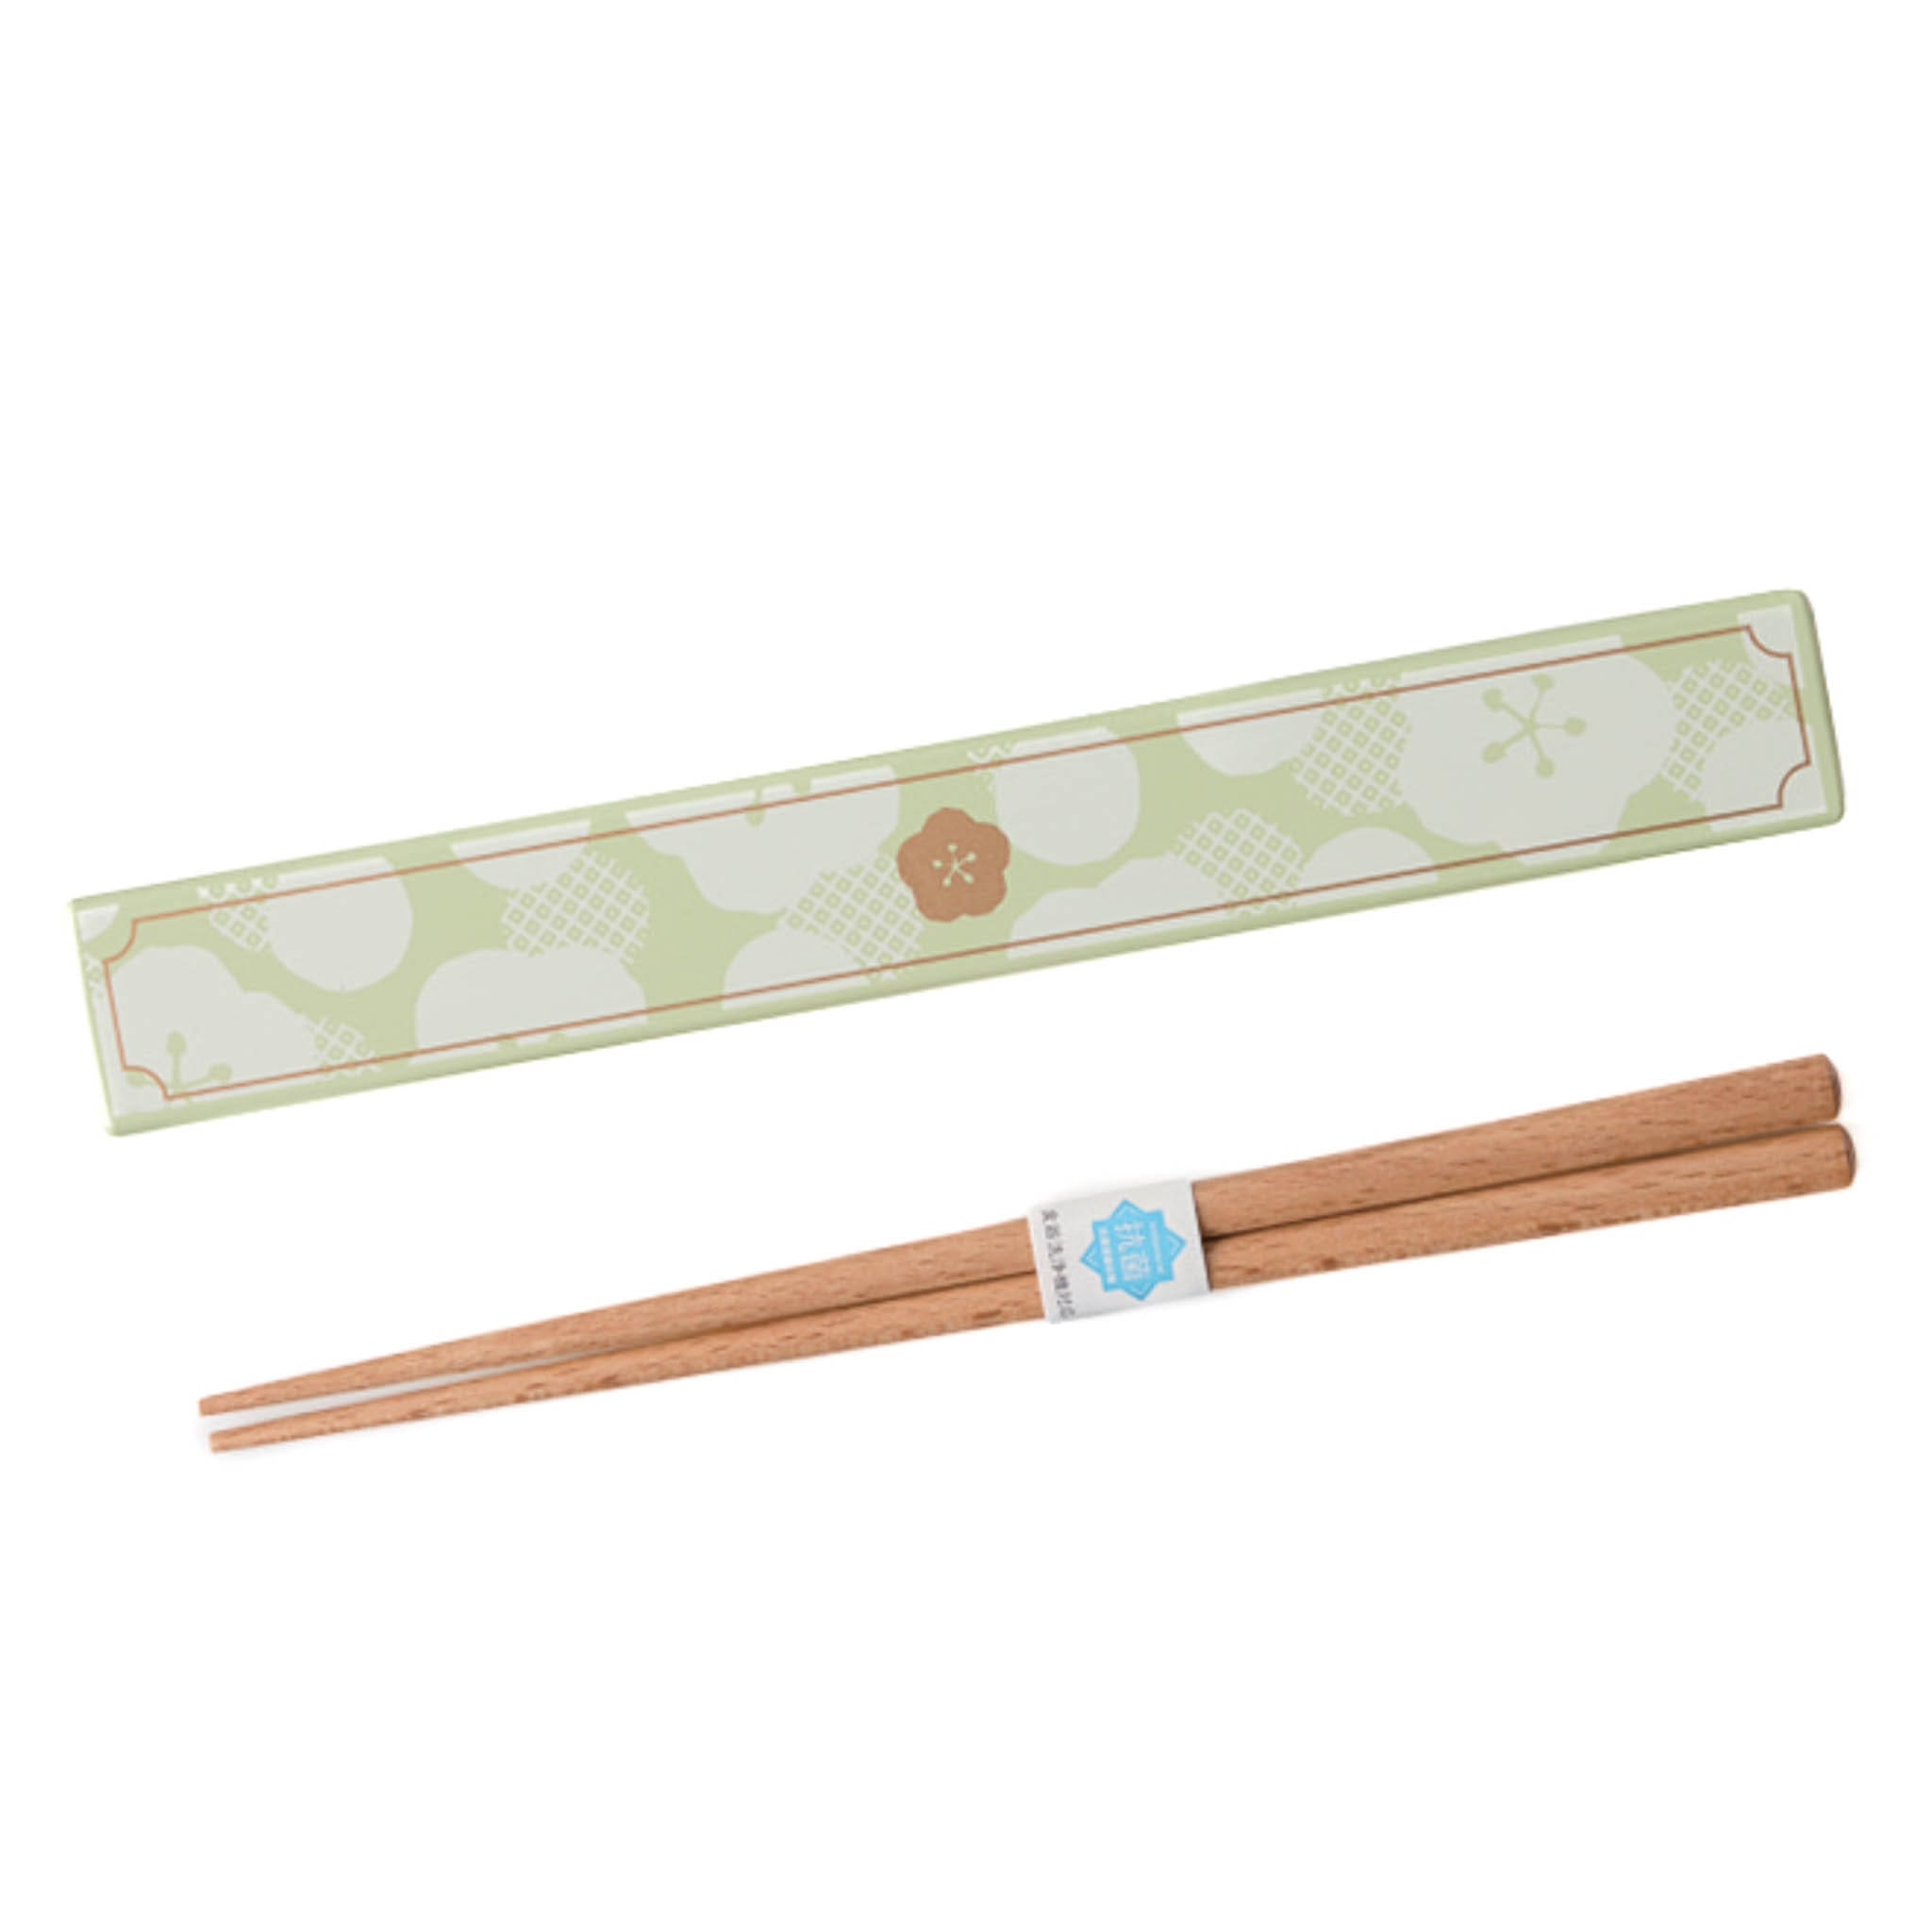 Takenaka Wooden Chopsticks in Green Case